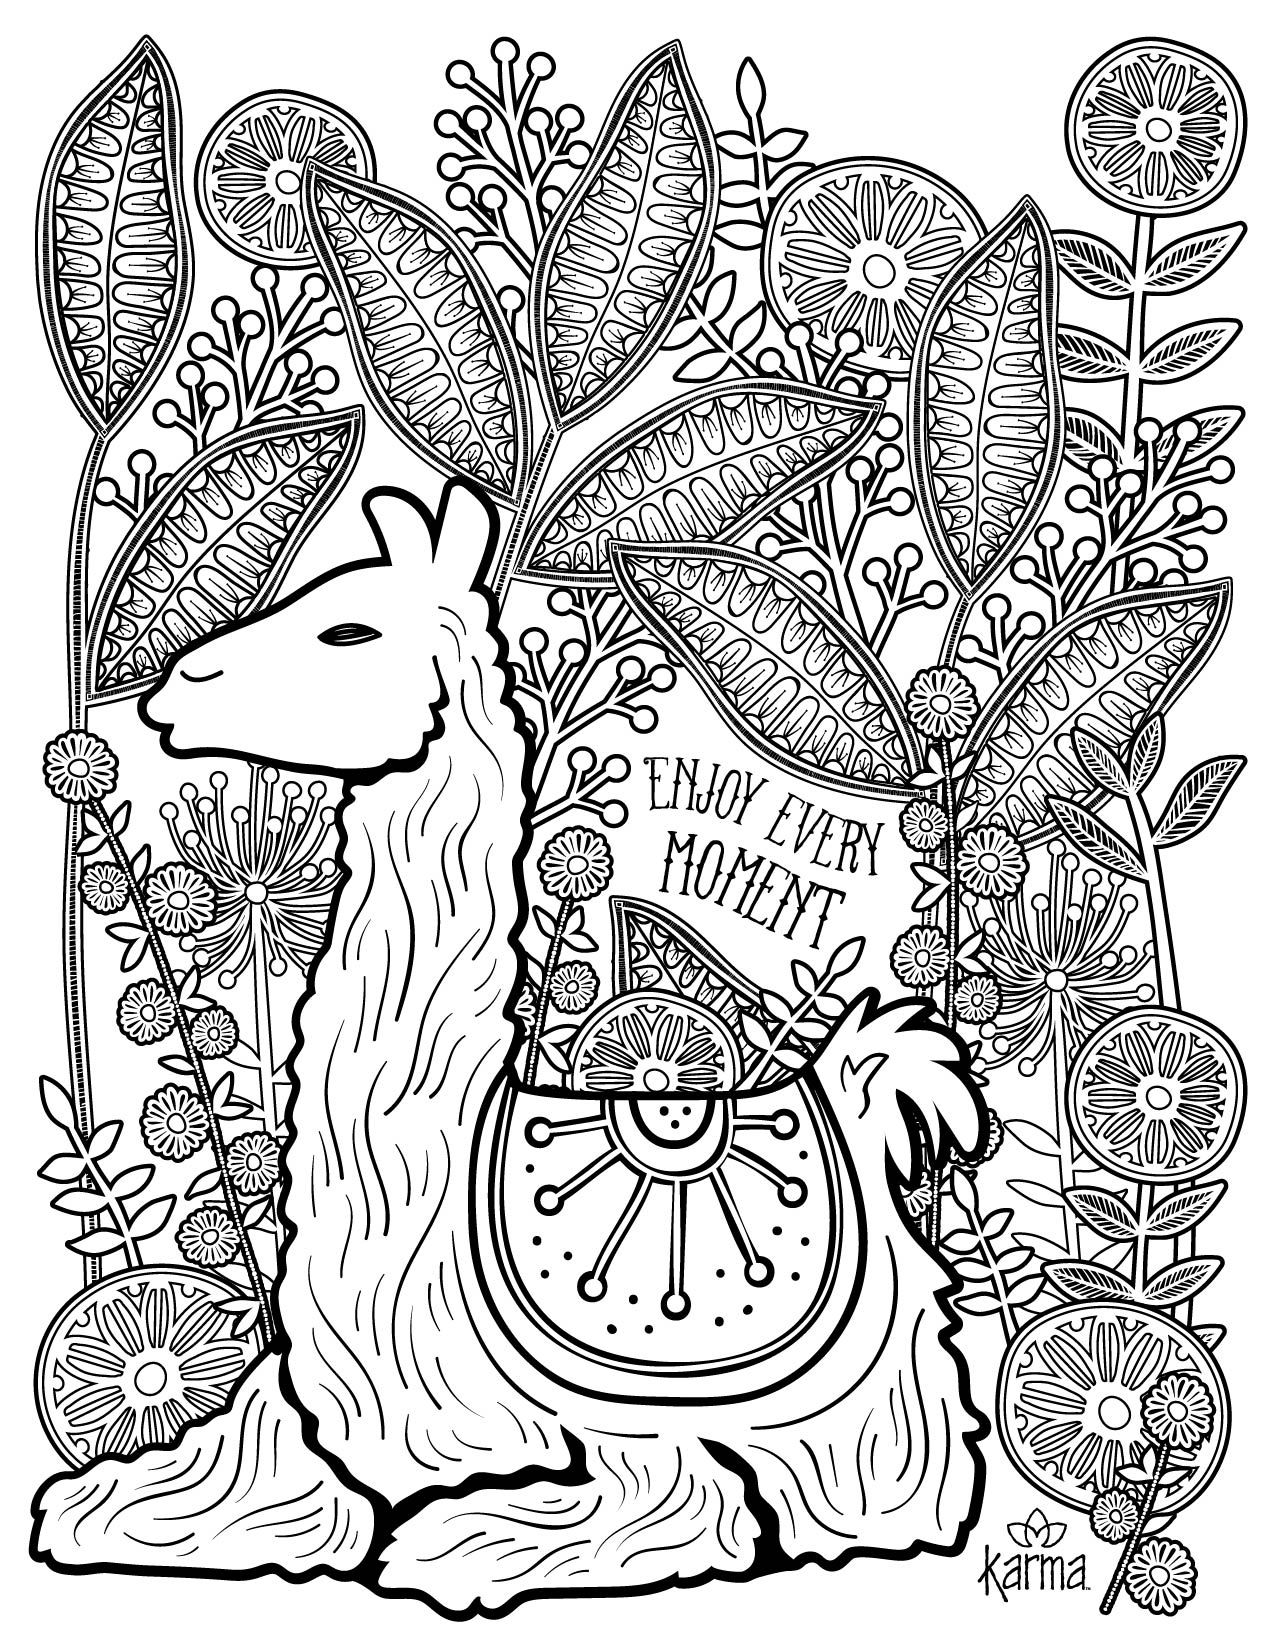 Llama! Free and printable coloring page by Karma Gifts | Coloring ...